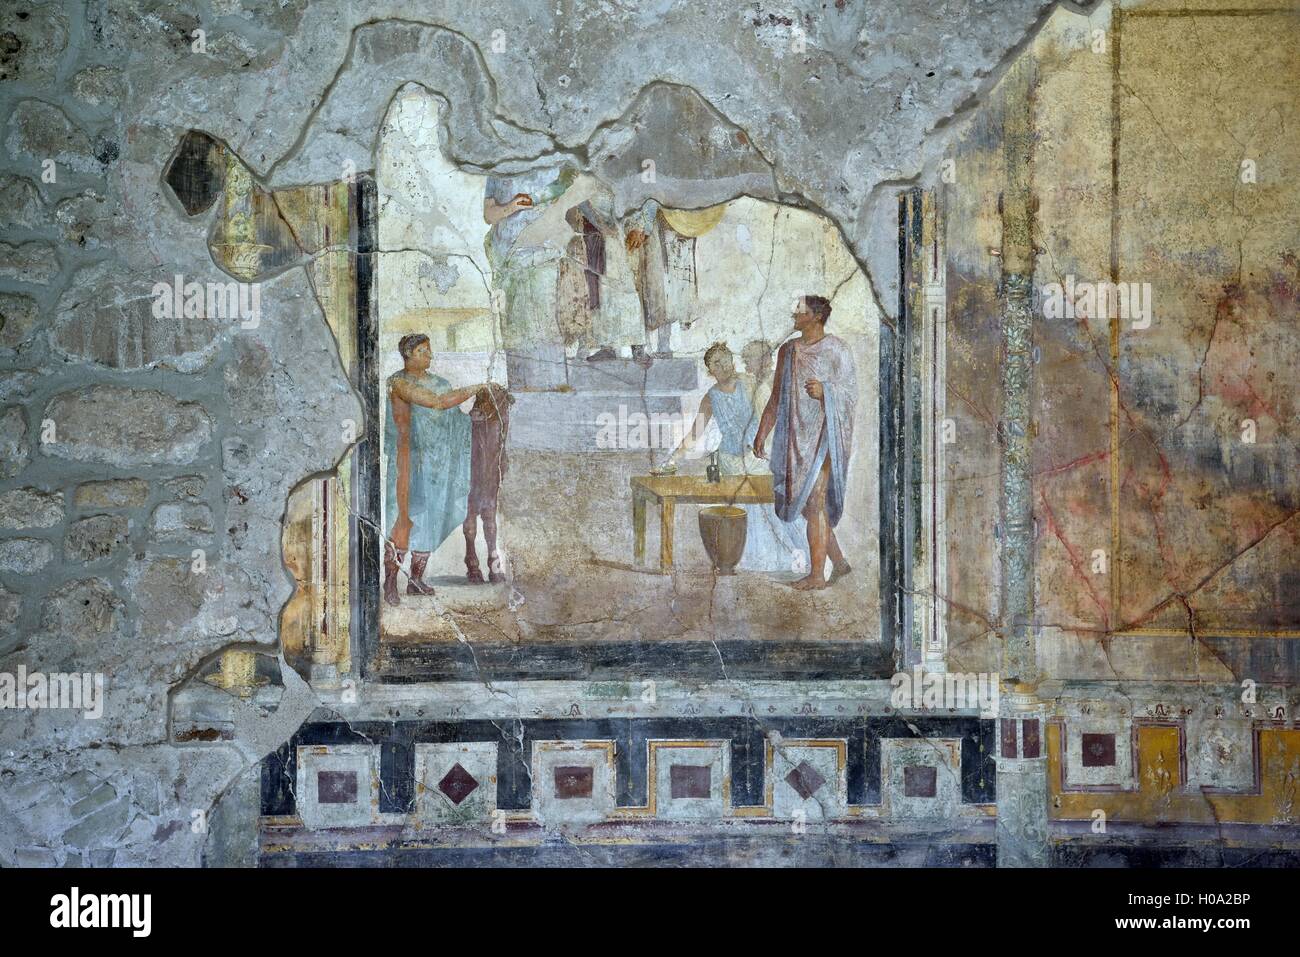 Pitture Murali Romane Pompei Immagini E Fotos Stock Alamy